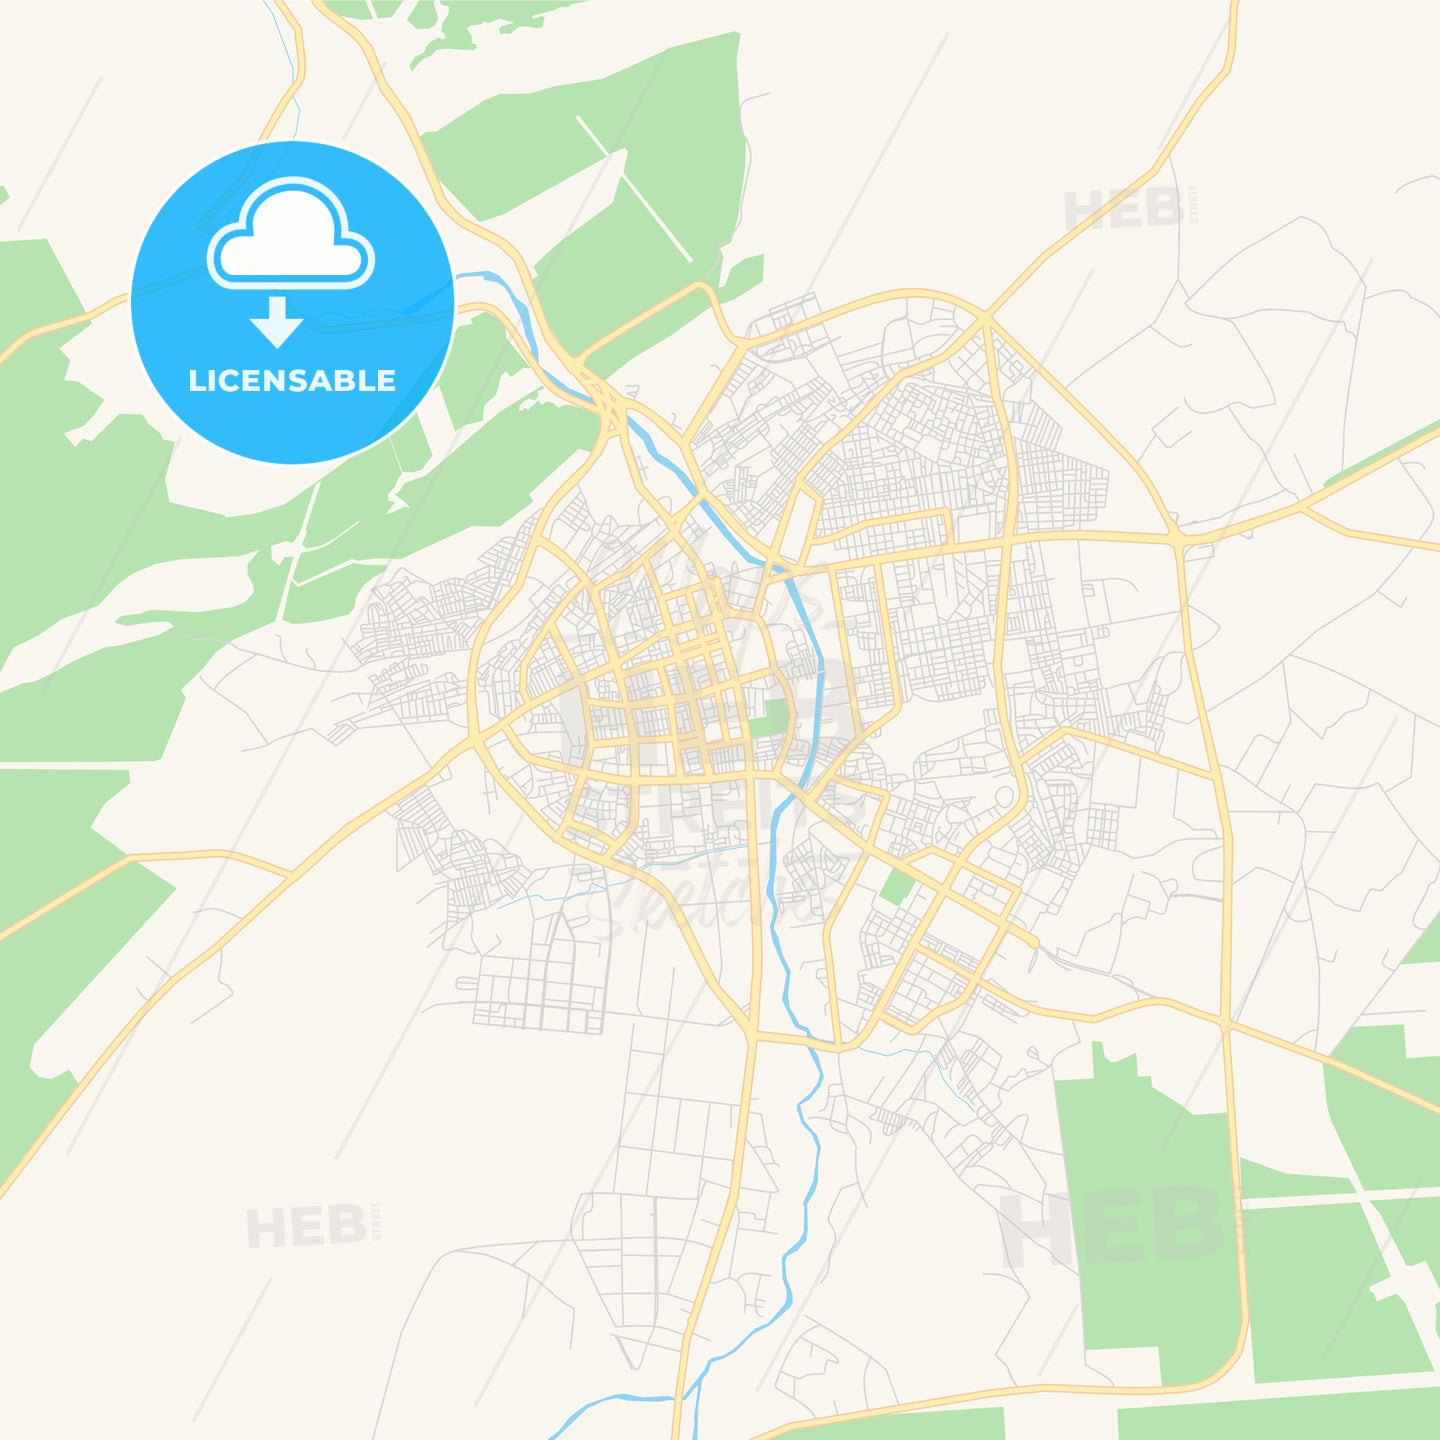 Printable street map of Djelfa, Algeria